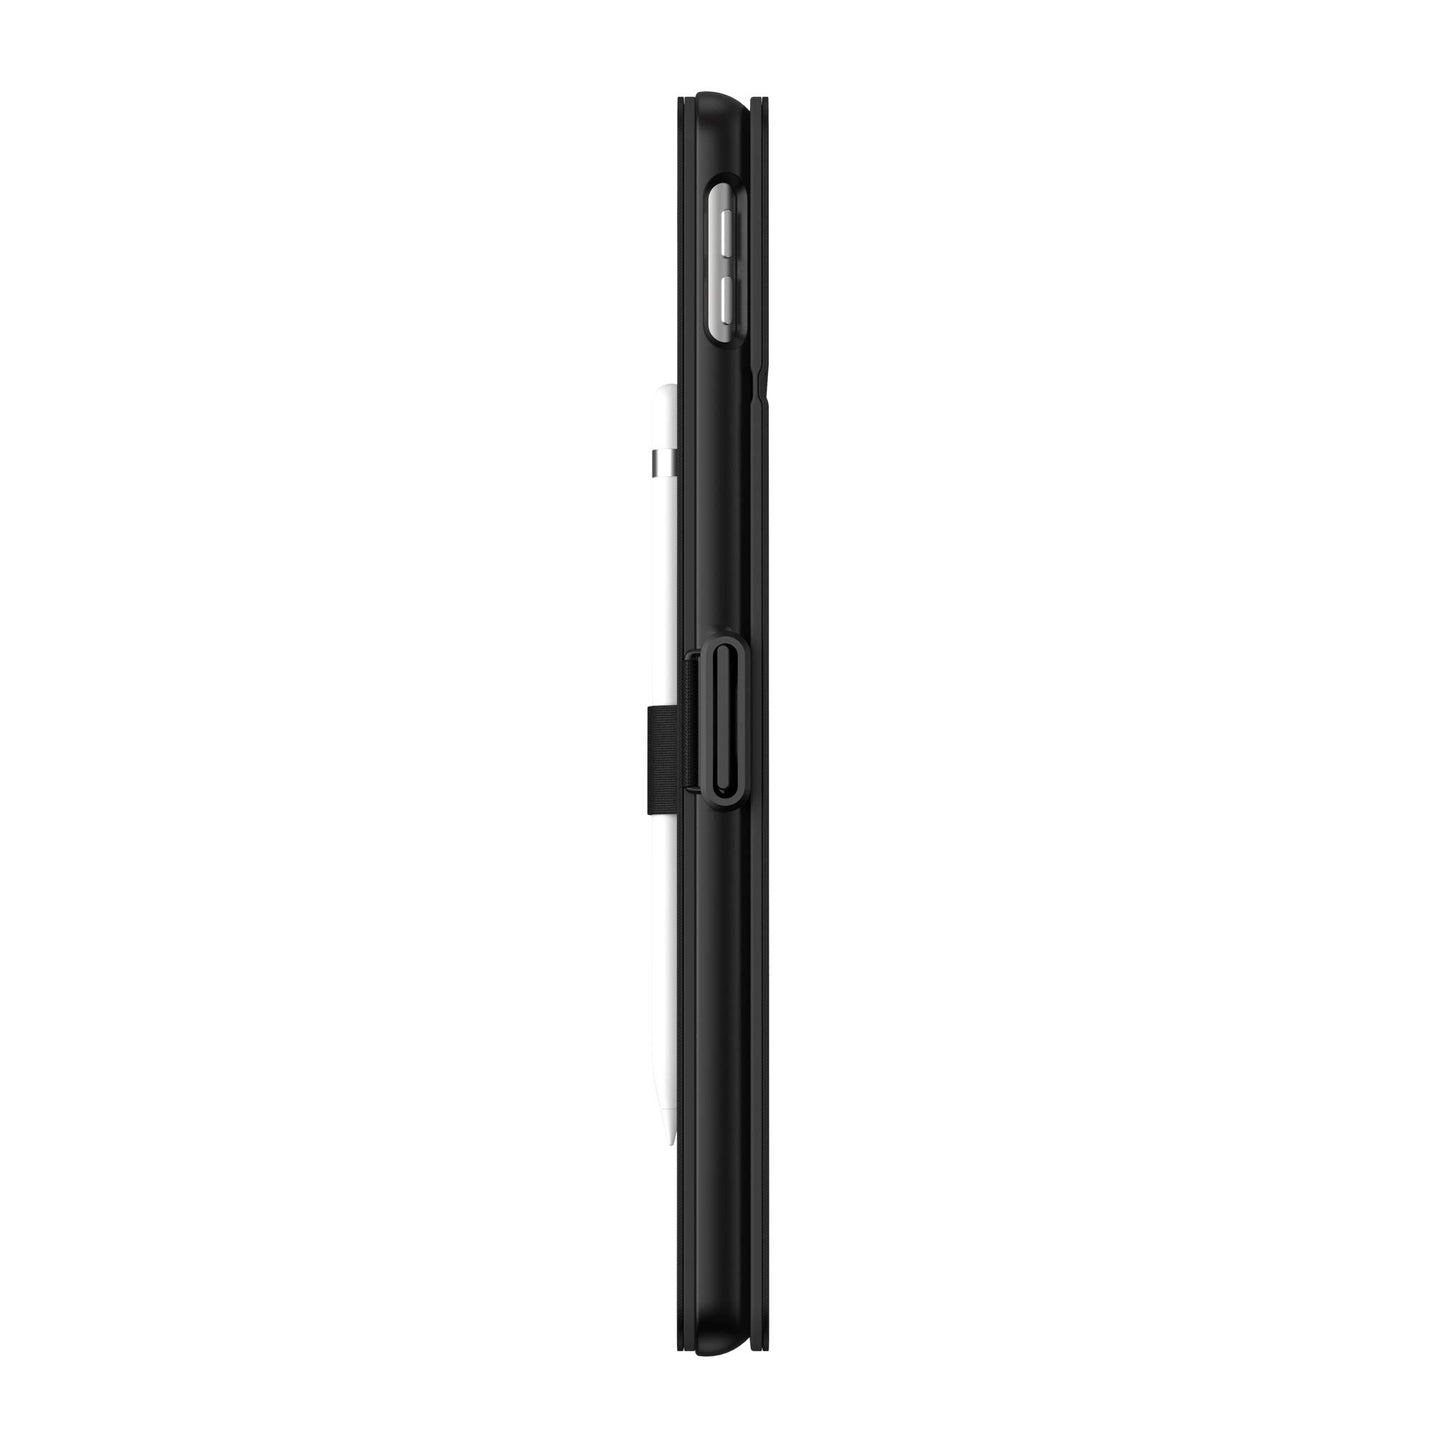 Speck Balance Folio Case for iPad 10.2 Inch (2019-2021) - Drop & Camera Protection, Slim Multi Range Stand, Apple Pencil Holder - Black/Black